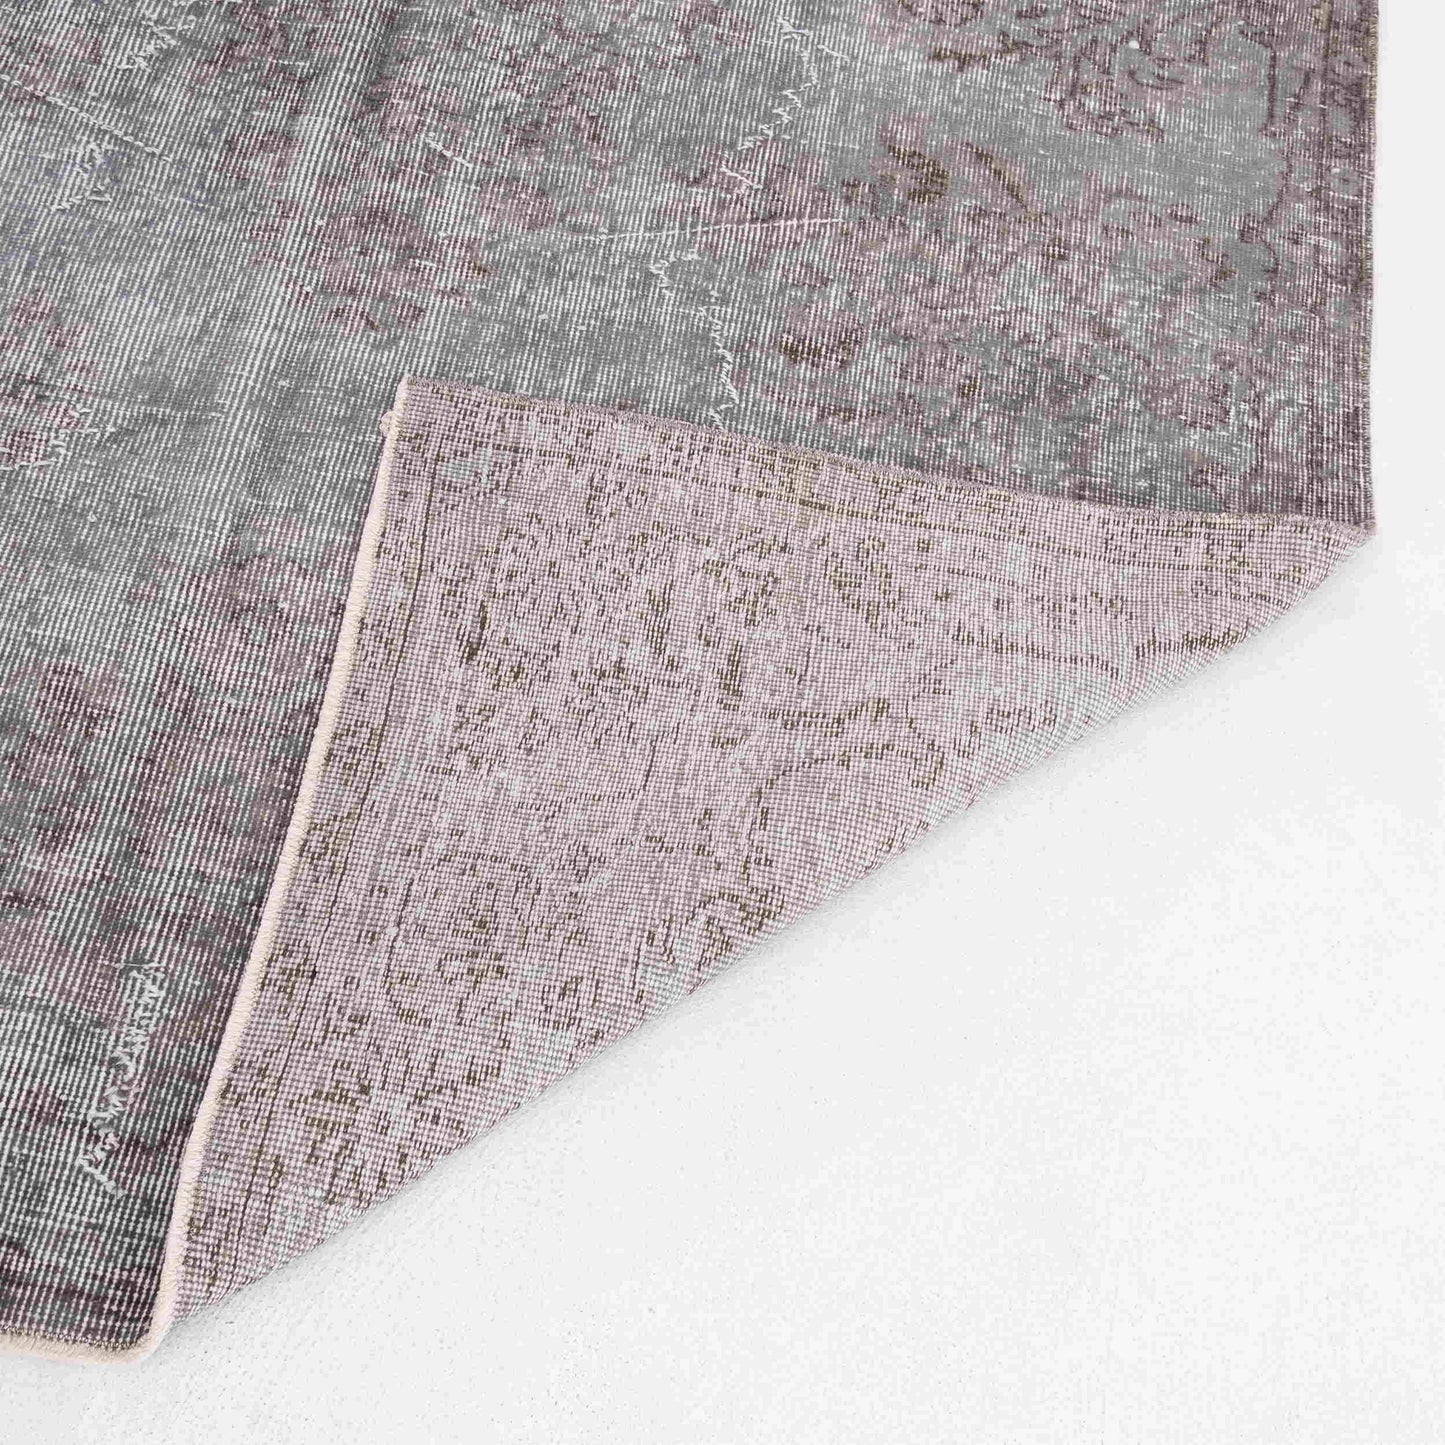 Oriental Rug Vintage Hand Knotted Wool On Cotton 159 x 256 Cm - 5' 3'' x 8' 5'' Grey C008 ER12